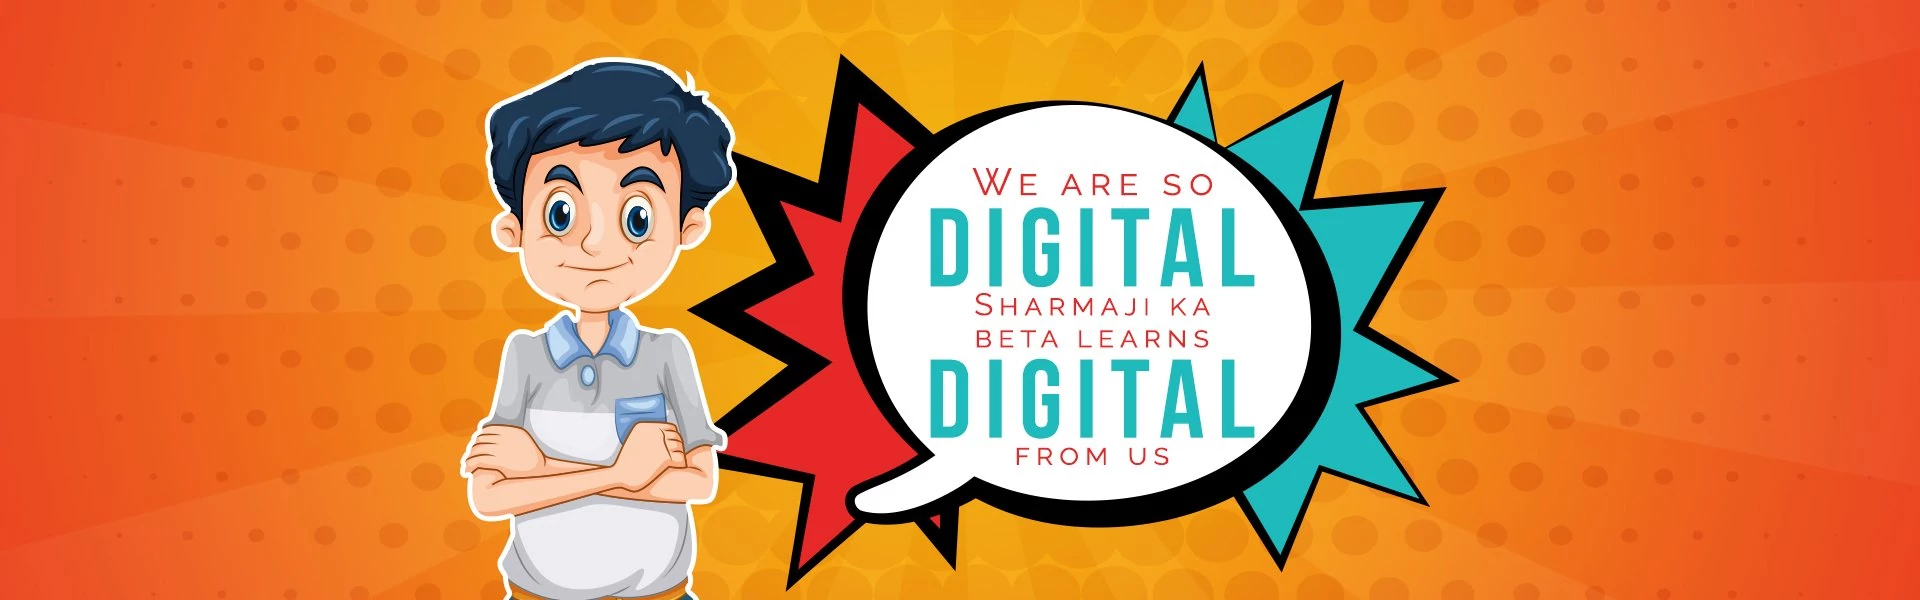 we are so digital sharmaji ka beta learns digital from us